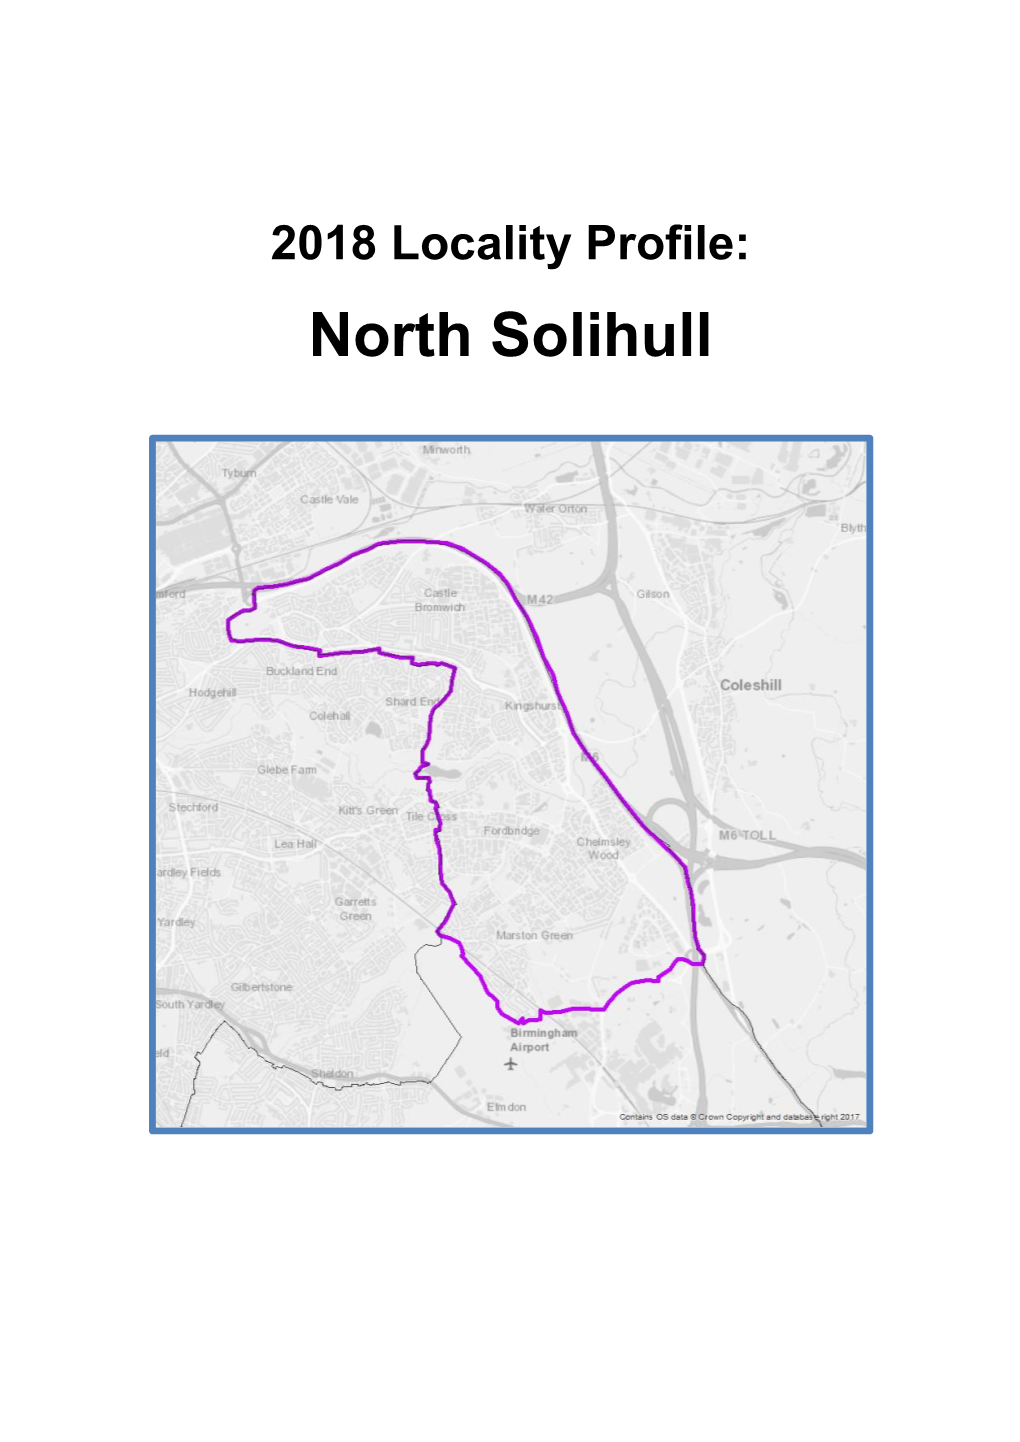 North Solihull Locality Profile